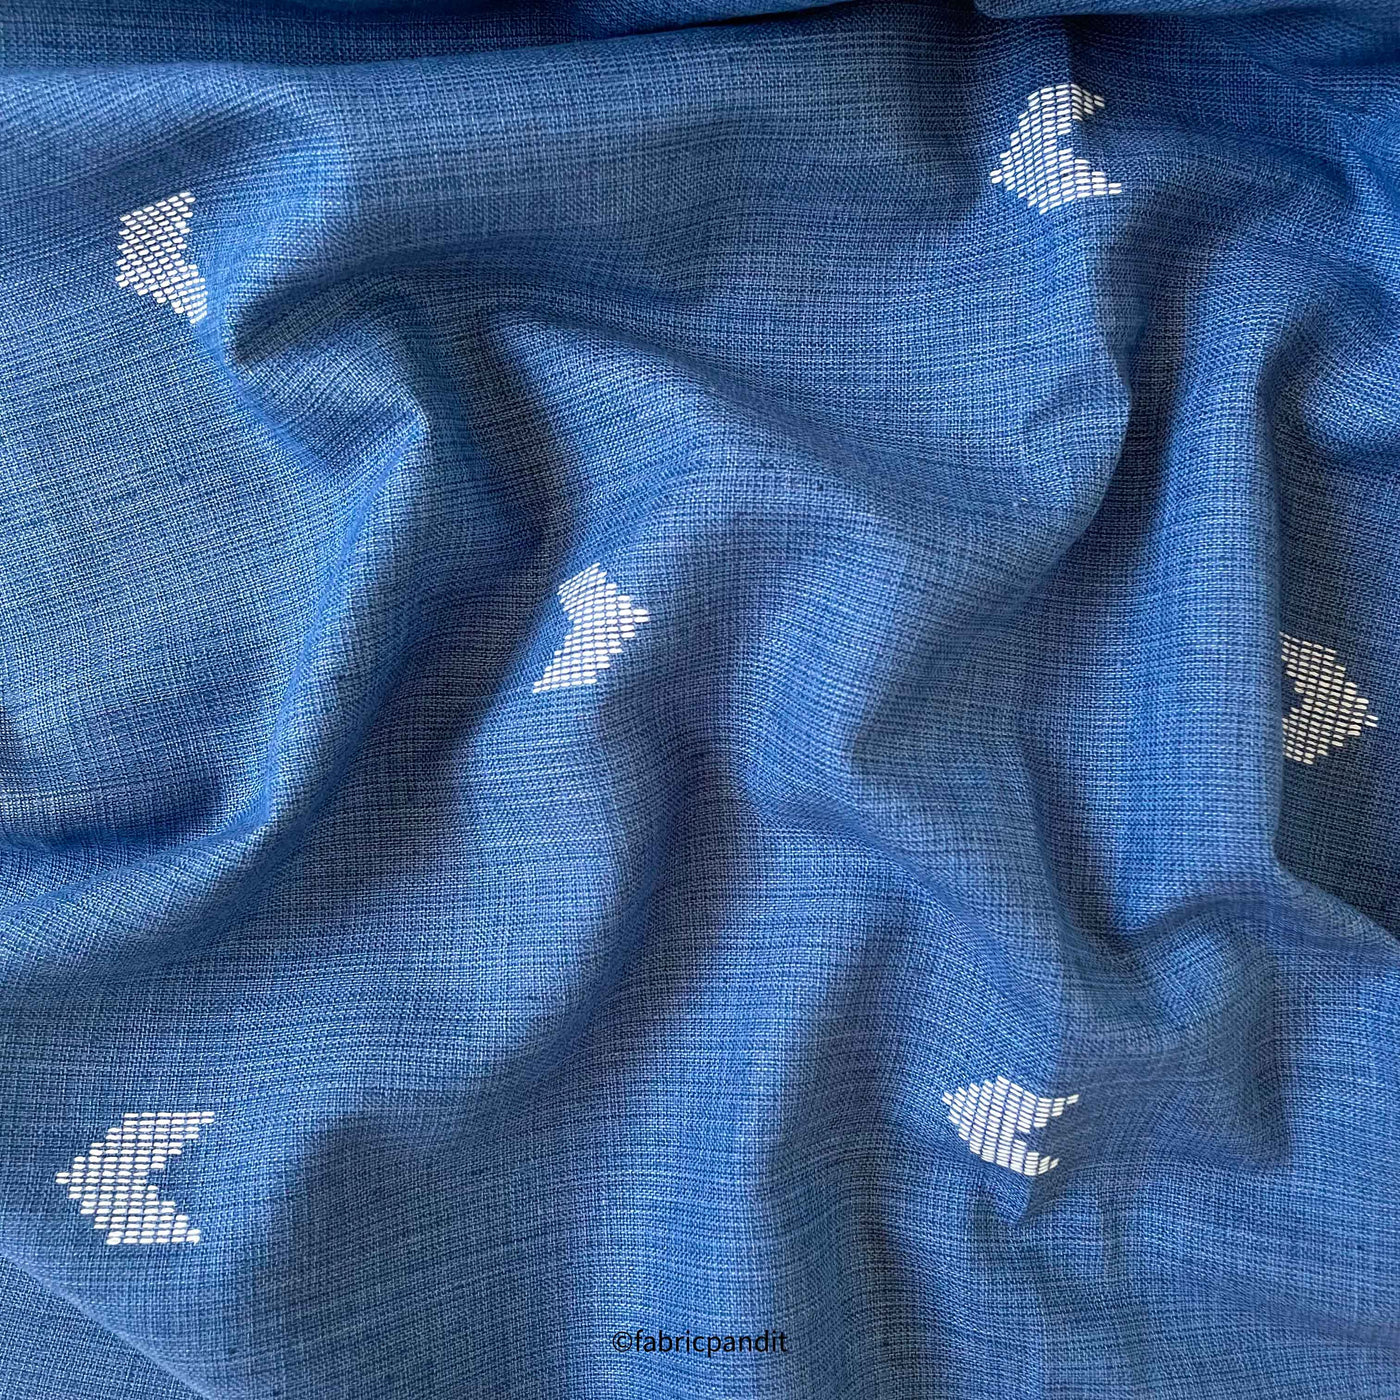 Fabric Pandit Cut Piece (CUT PIECE) Denim Blue & Off - White Geomrtric Jamdani Woven Pure Cotton Fabric